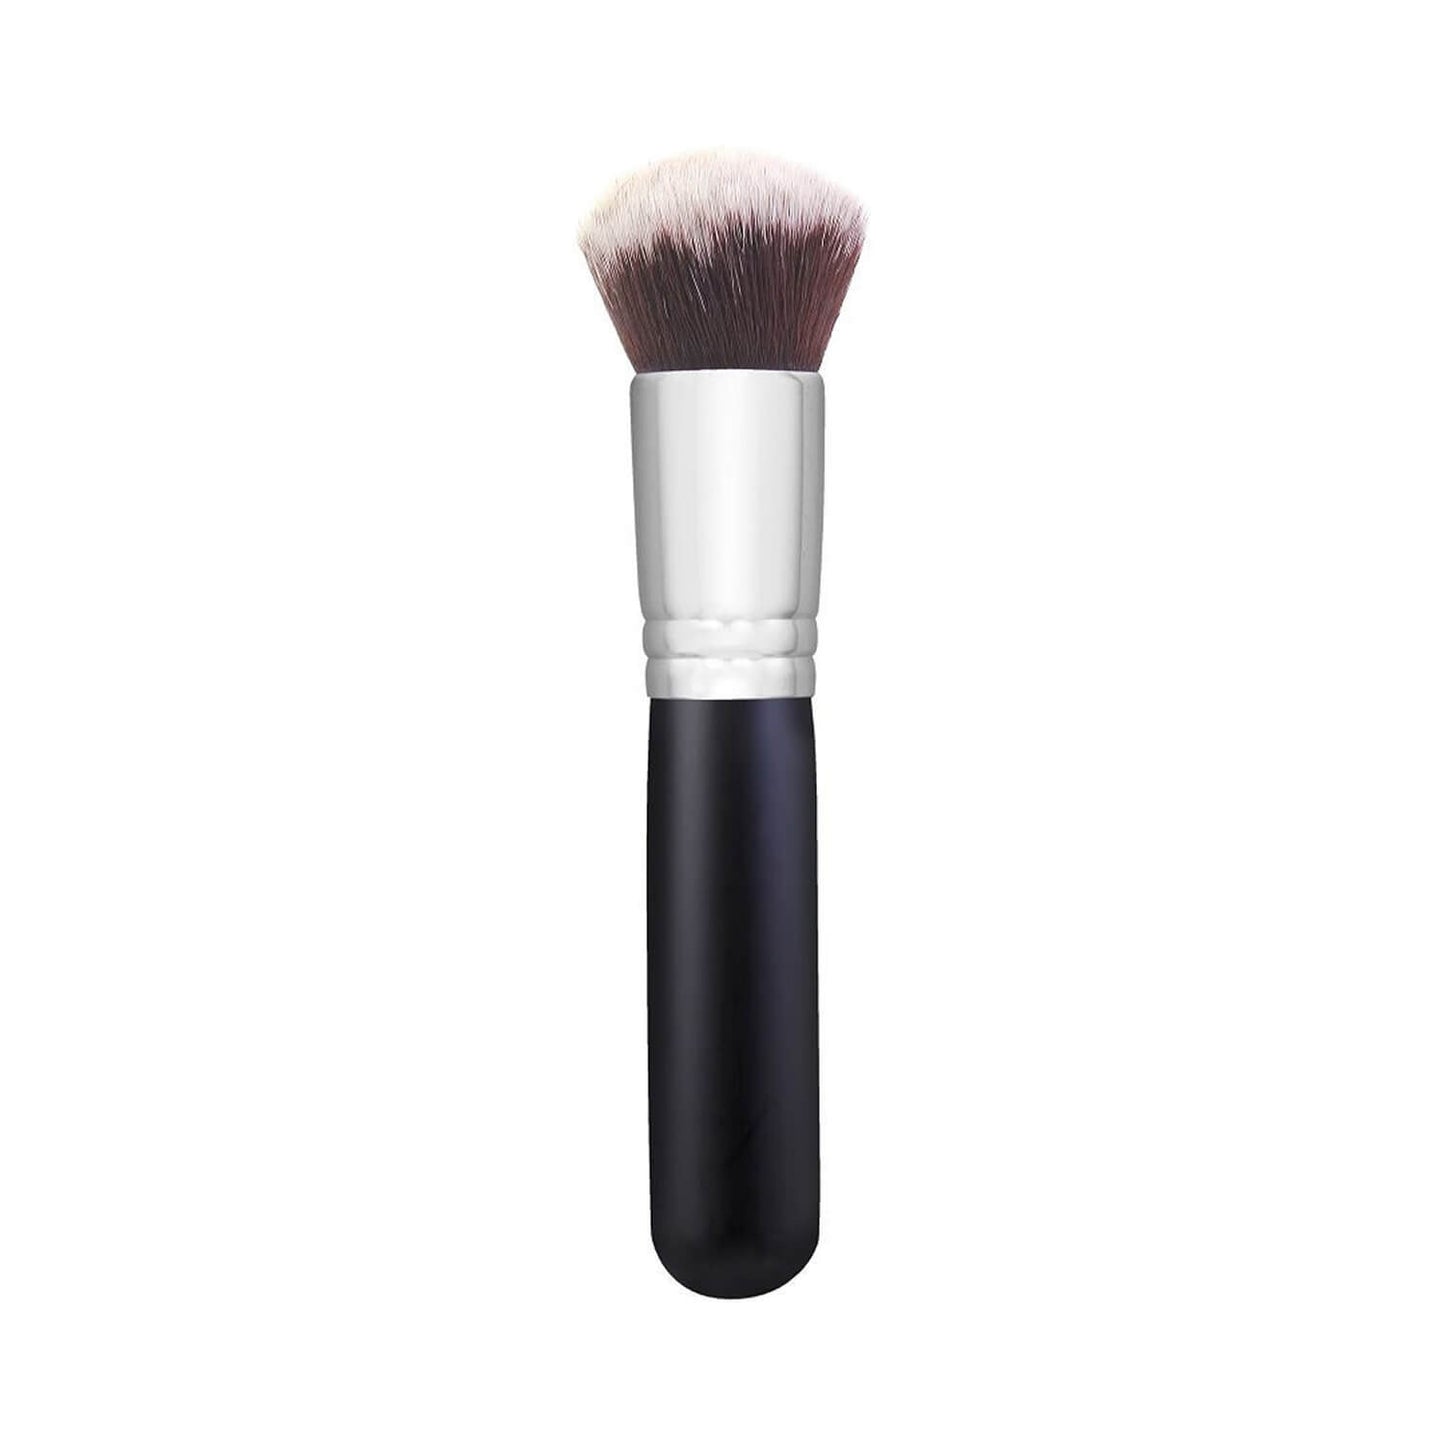 Morphe Cosmetics M439 Deluxe Buffer Brush